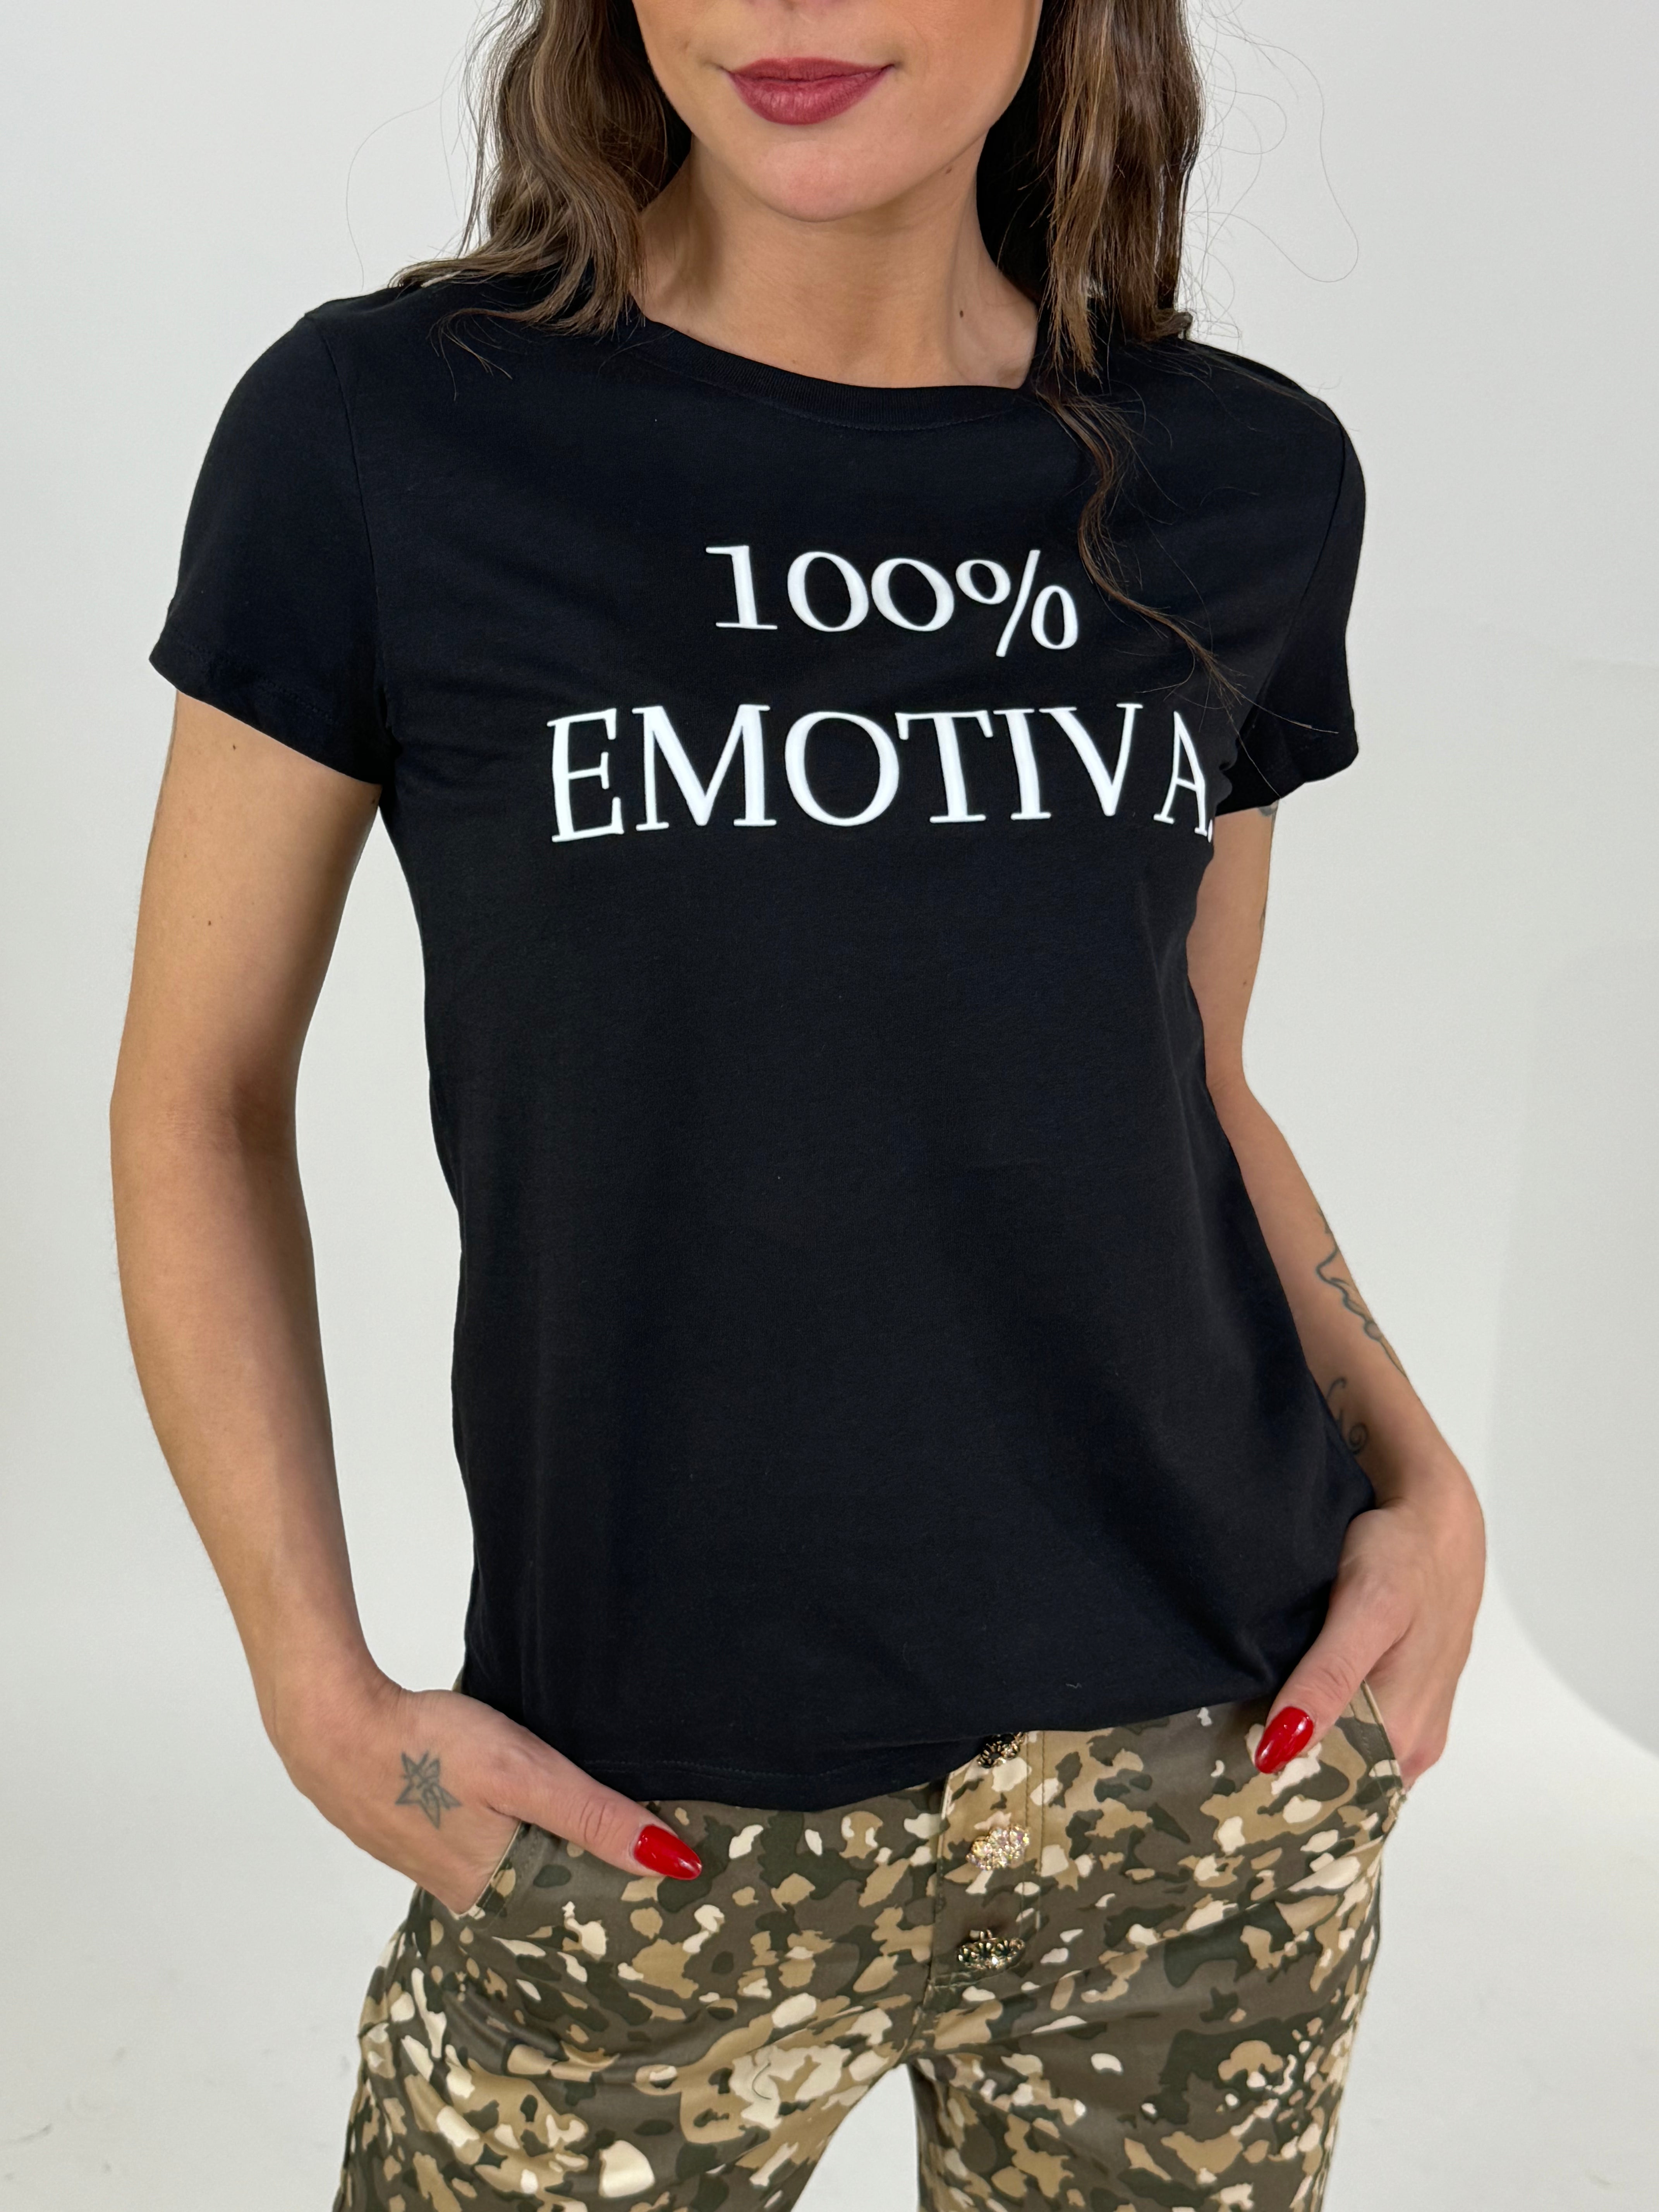 T-shirt Kikisix 100% EMOTIVA